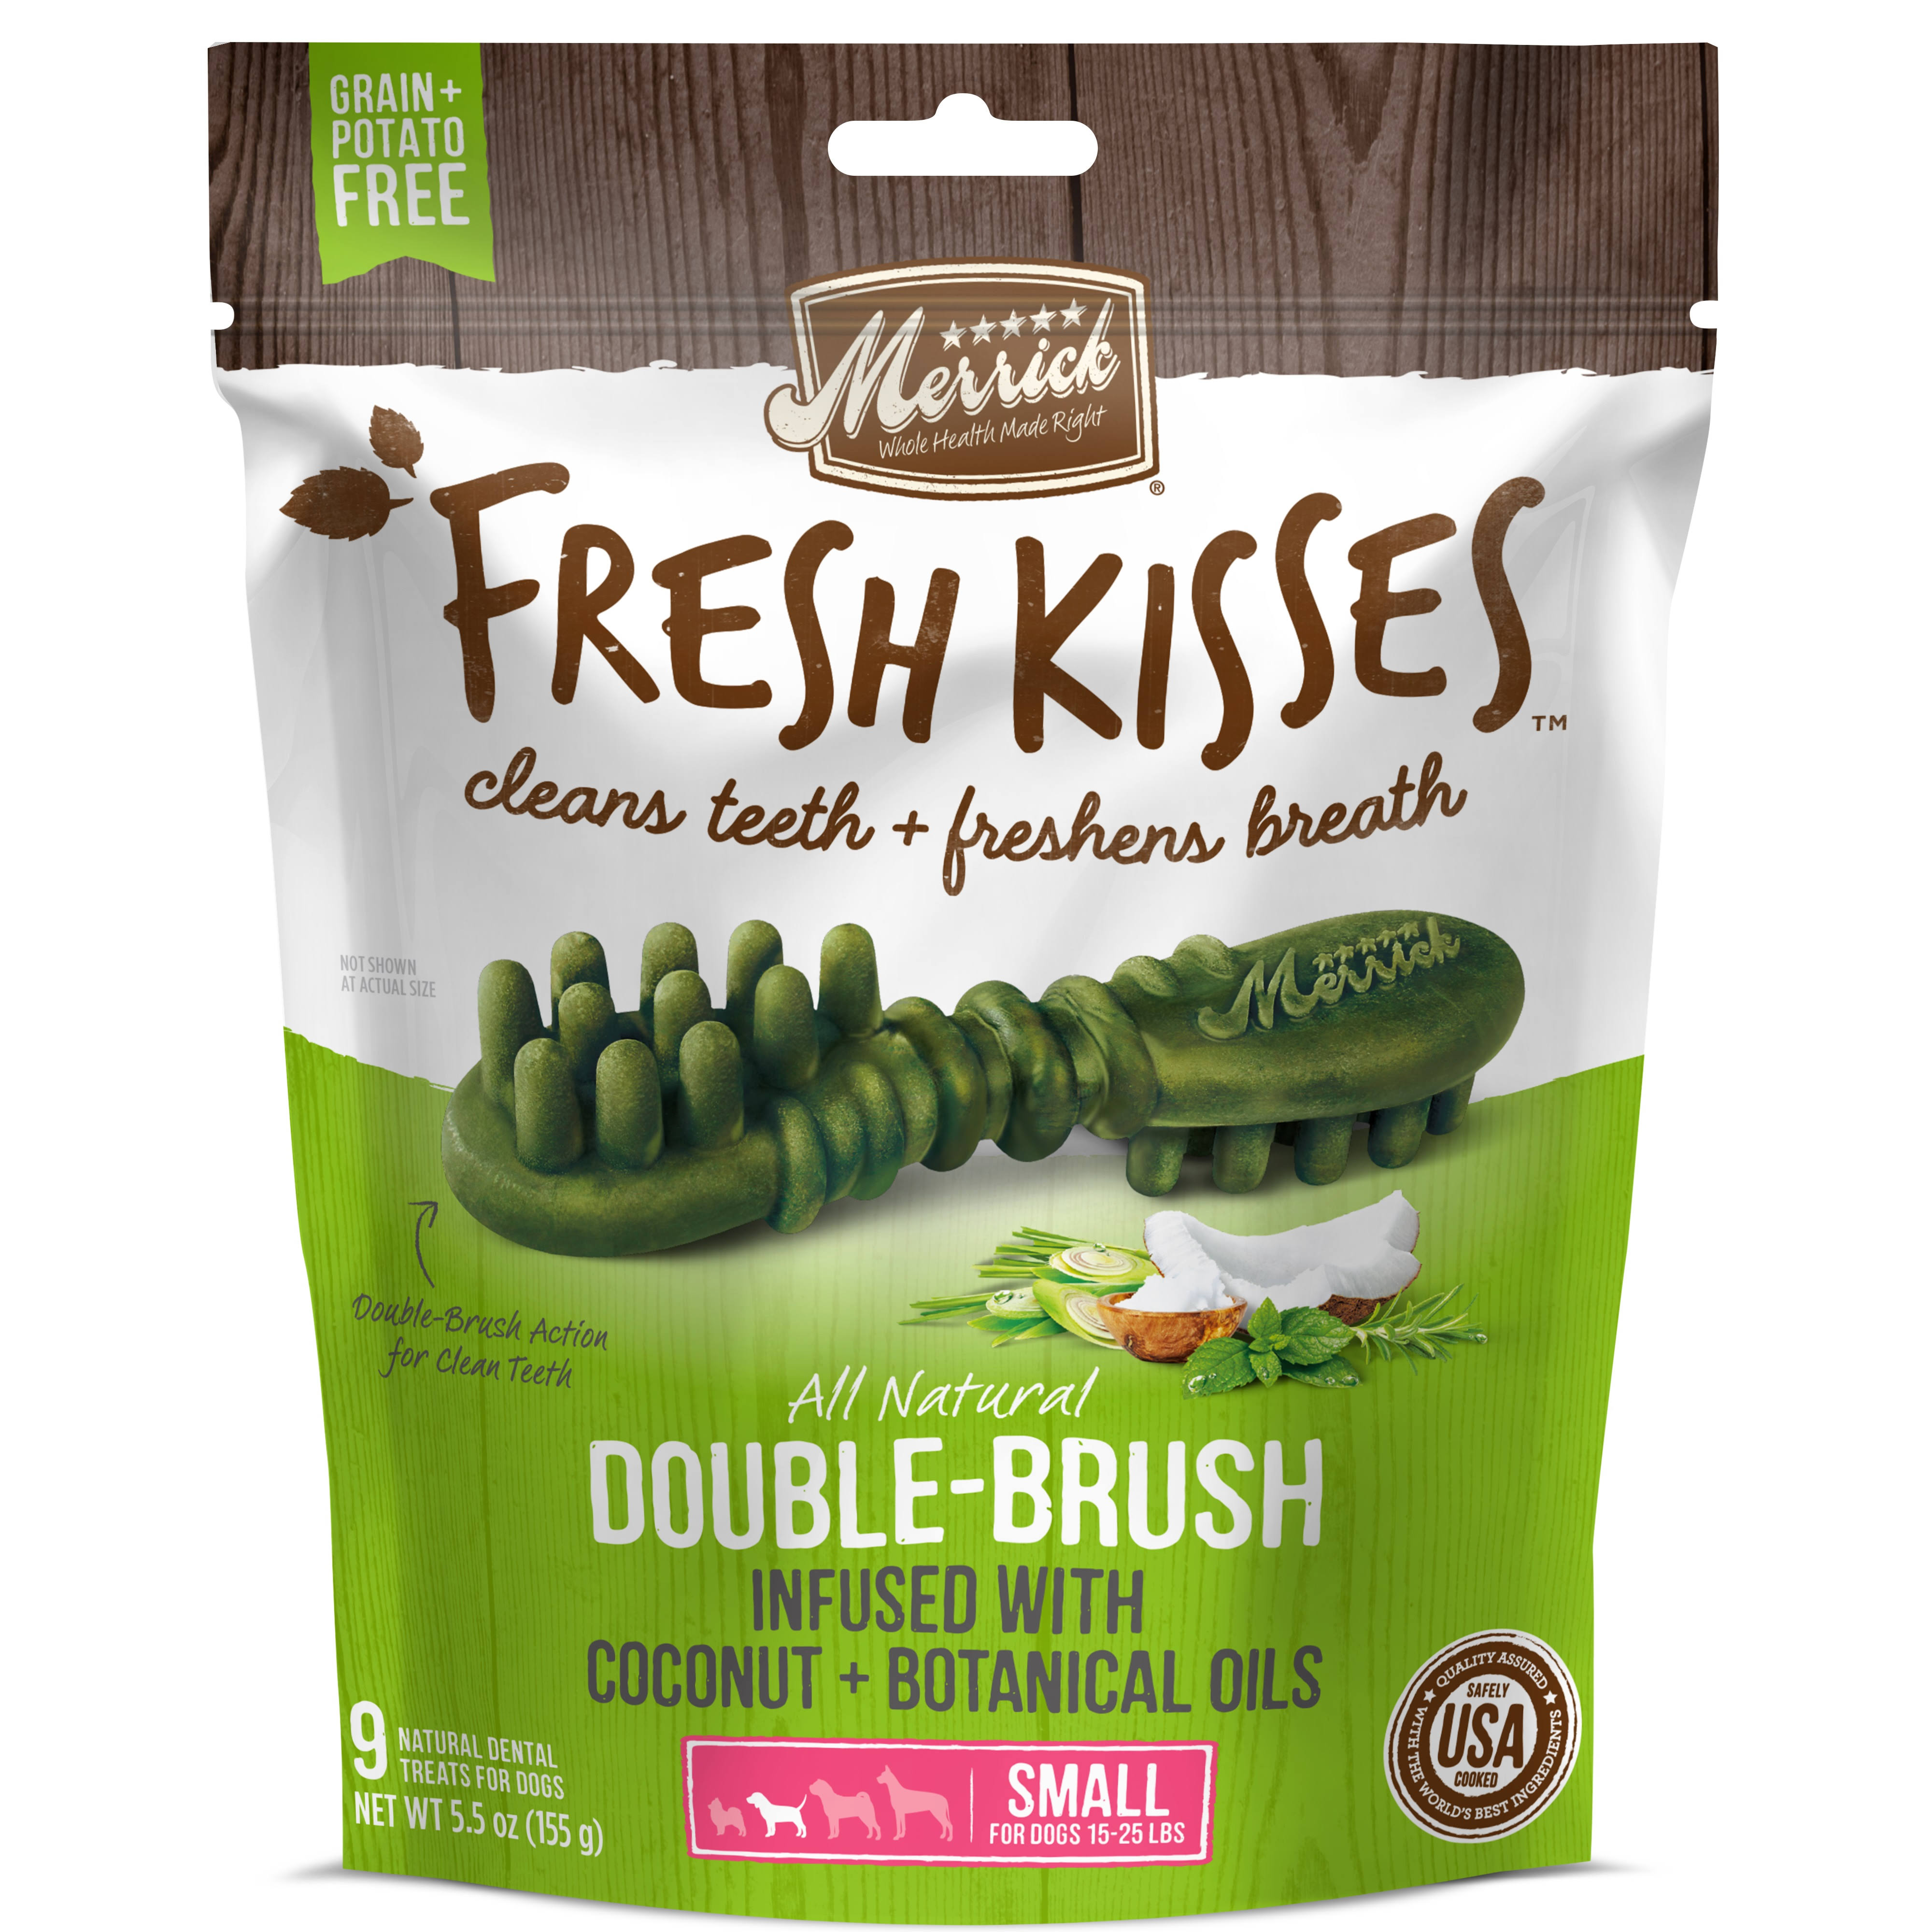 Merrick Fresh Kisses Dental Treats, for Dogs, 15-25 lbs, Coconut + Botanical Oils, Double-Brush, Small - 9 treats, 5.5 oz